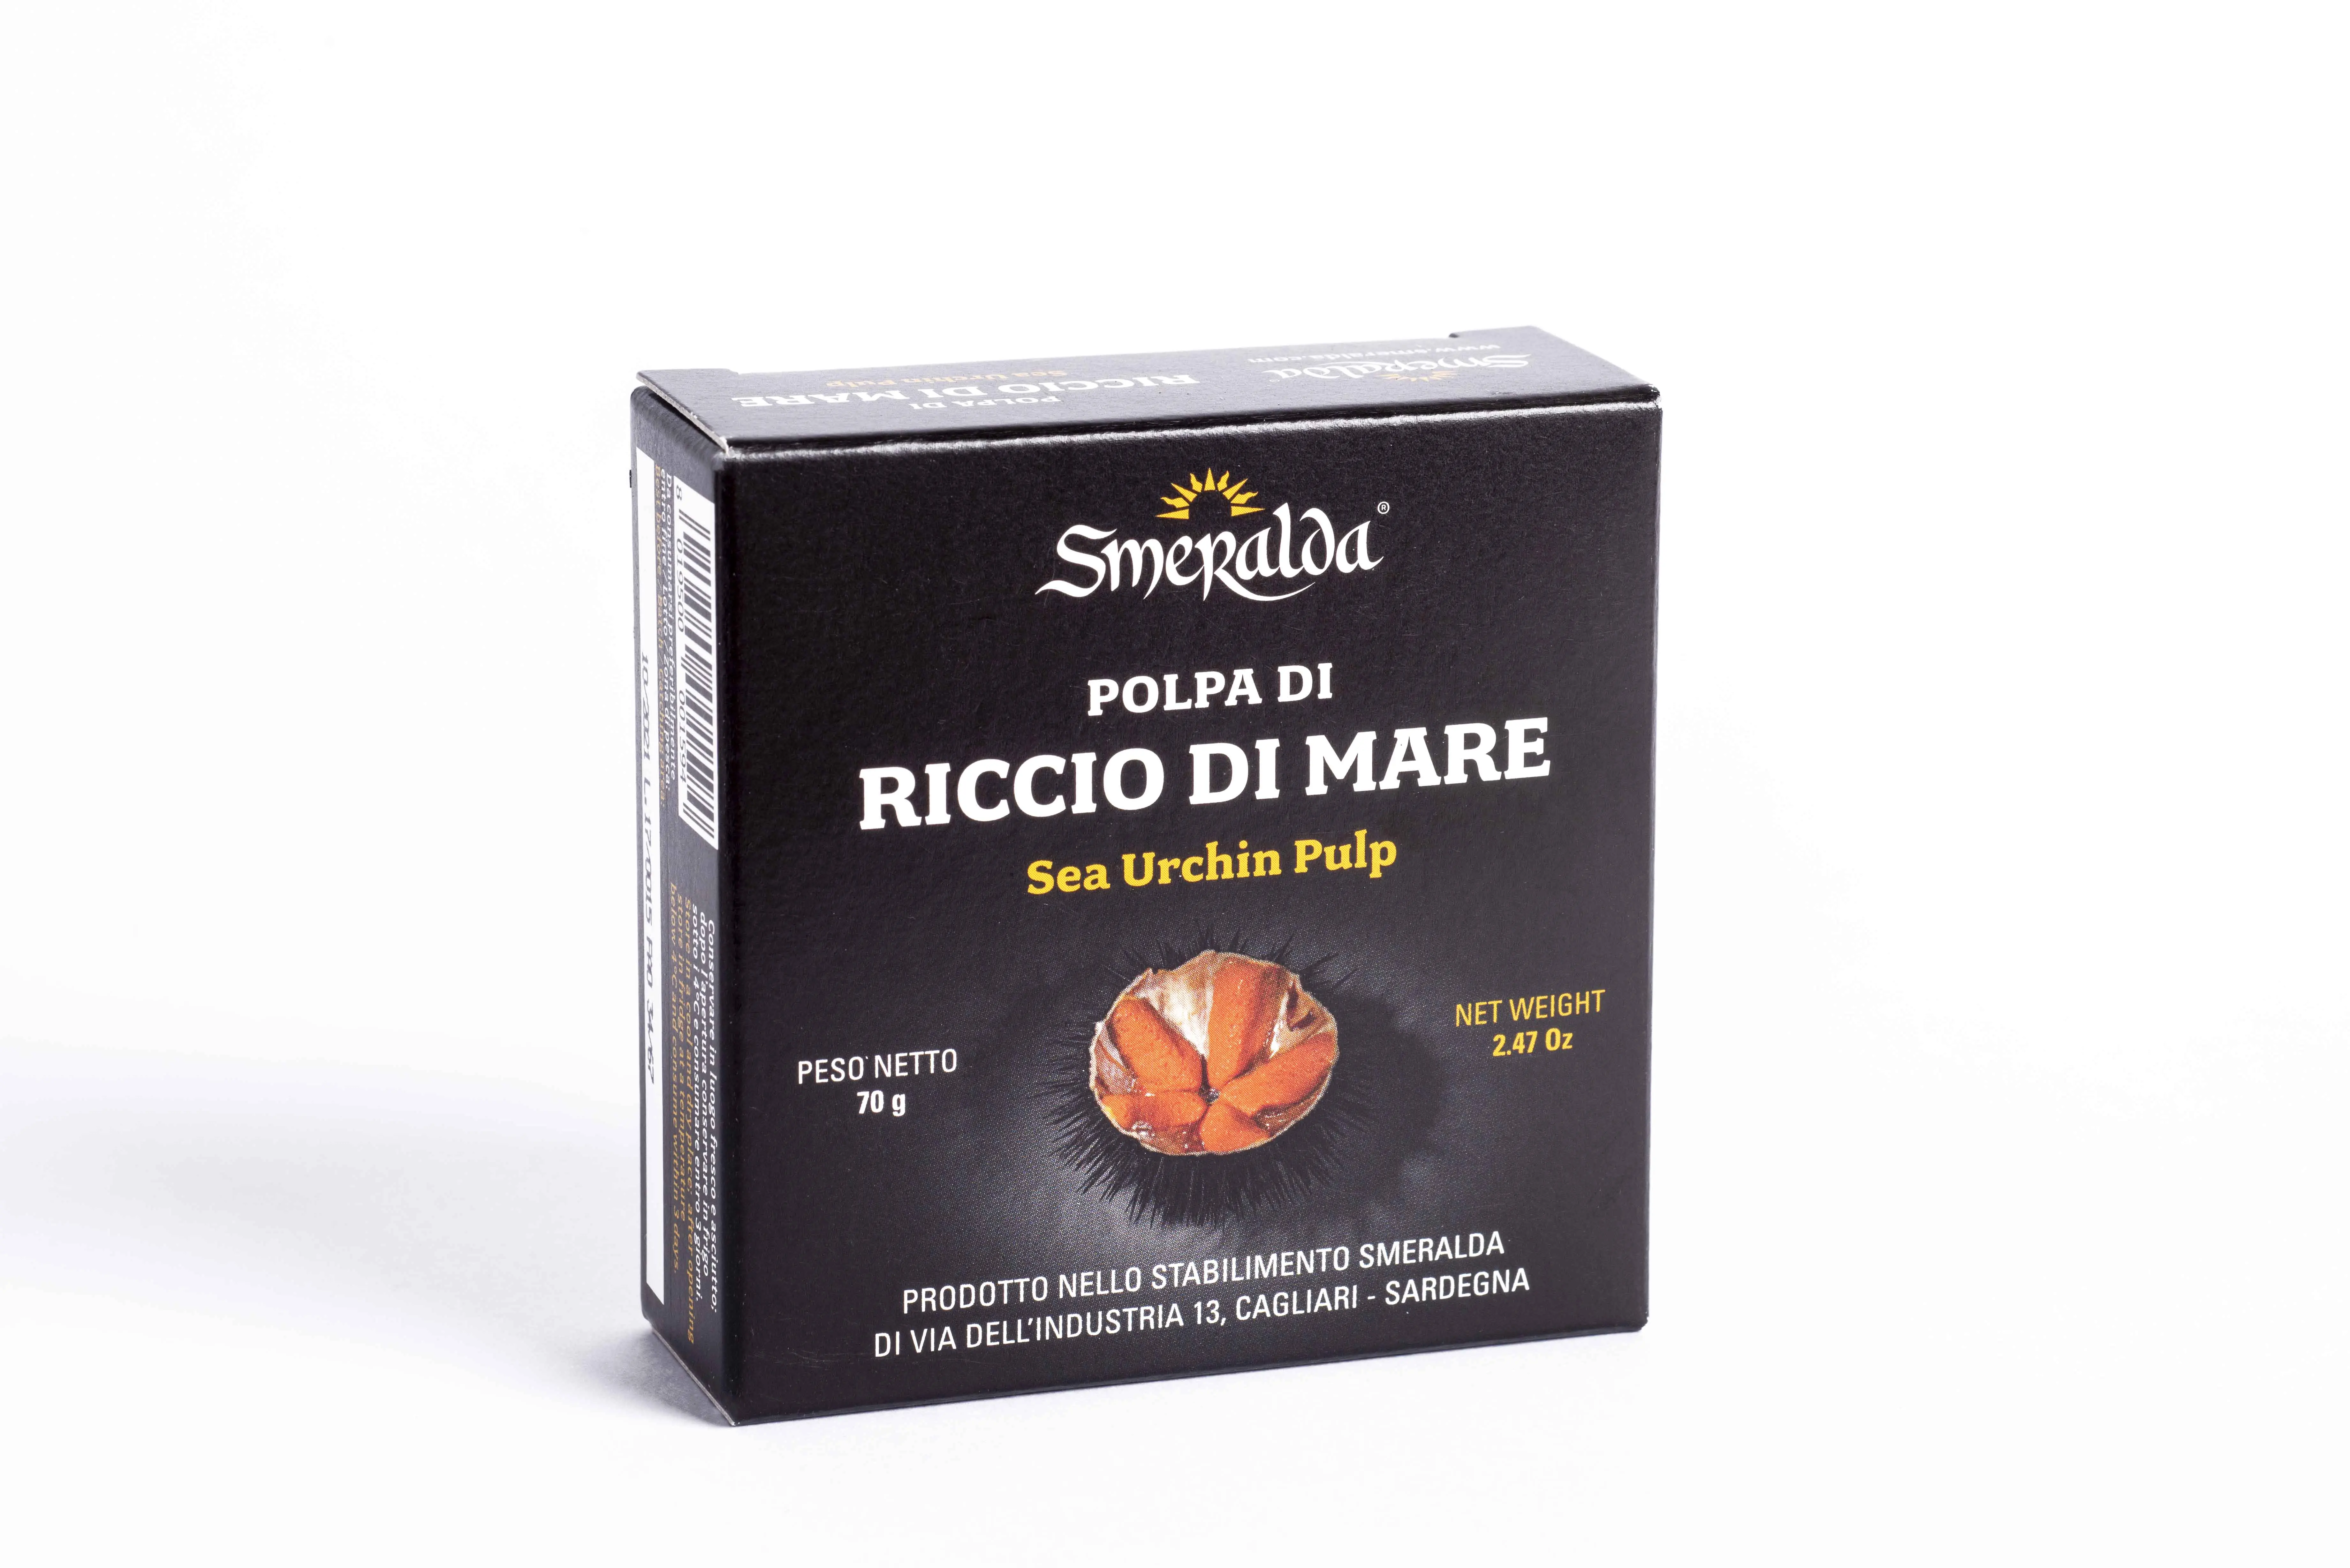 Premium Quality Made In Sardinia Italy Sea Urchin Pulp Seafood Canned Food Sea Urchin Price